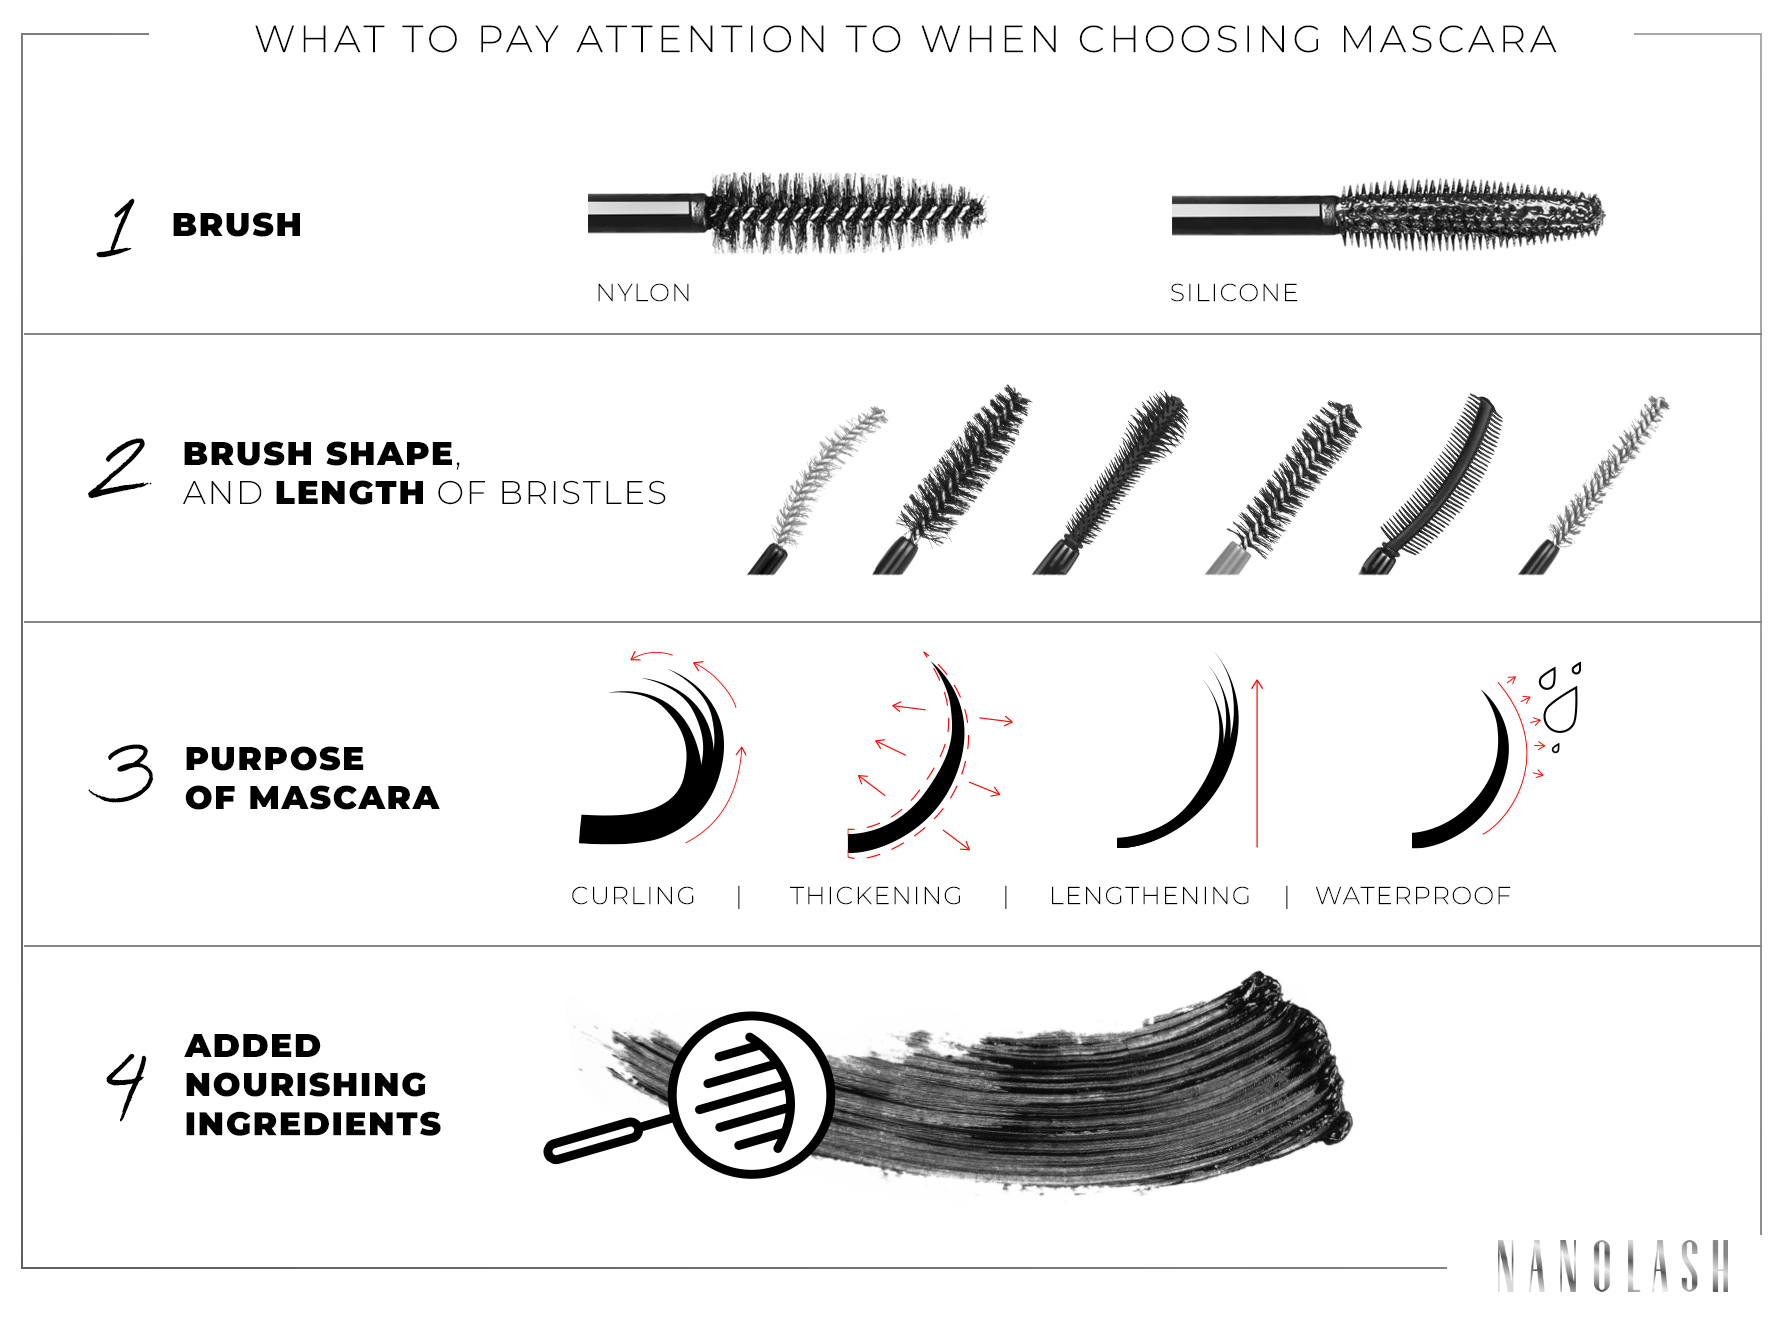 Mascara - a good brush